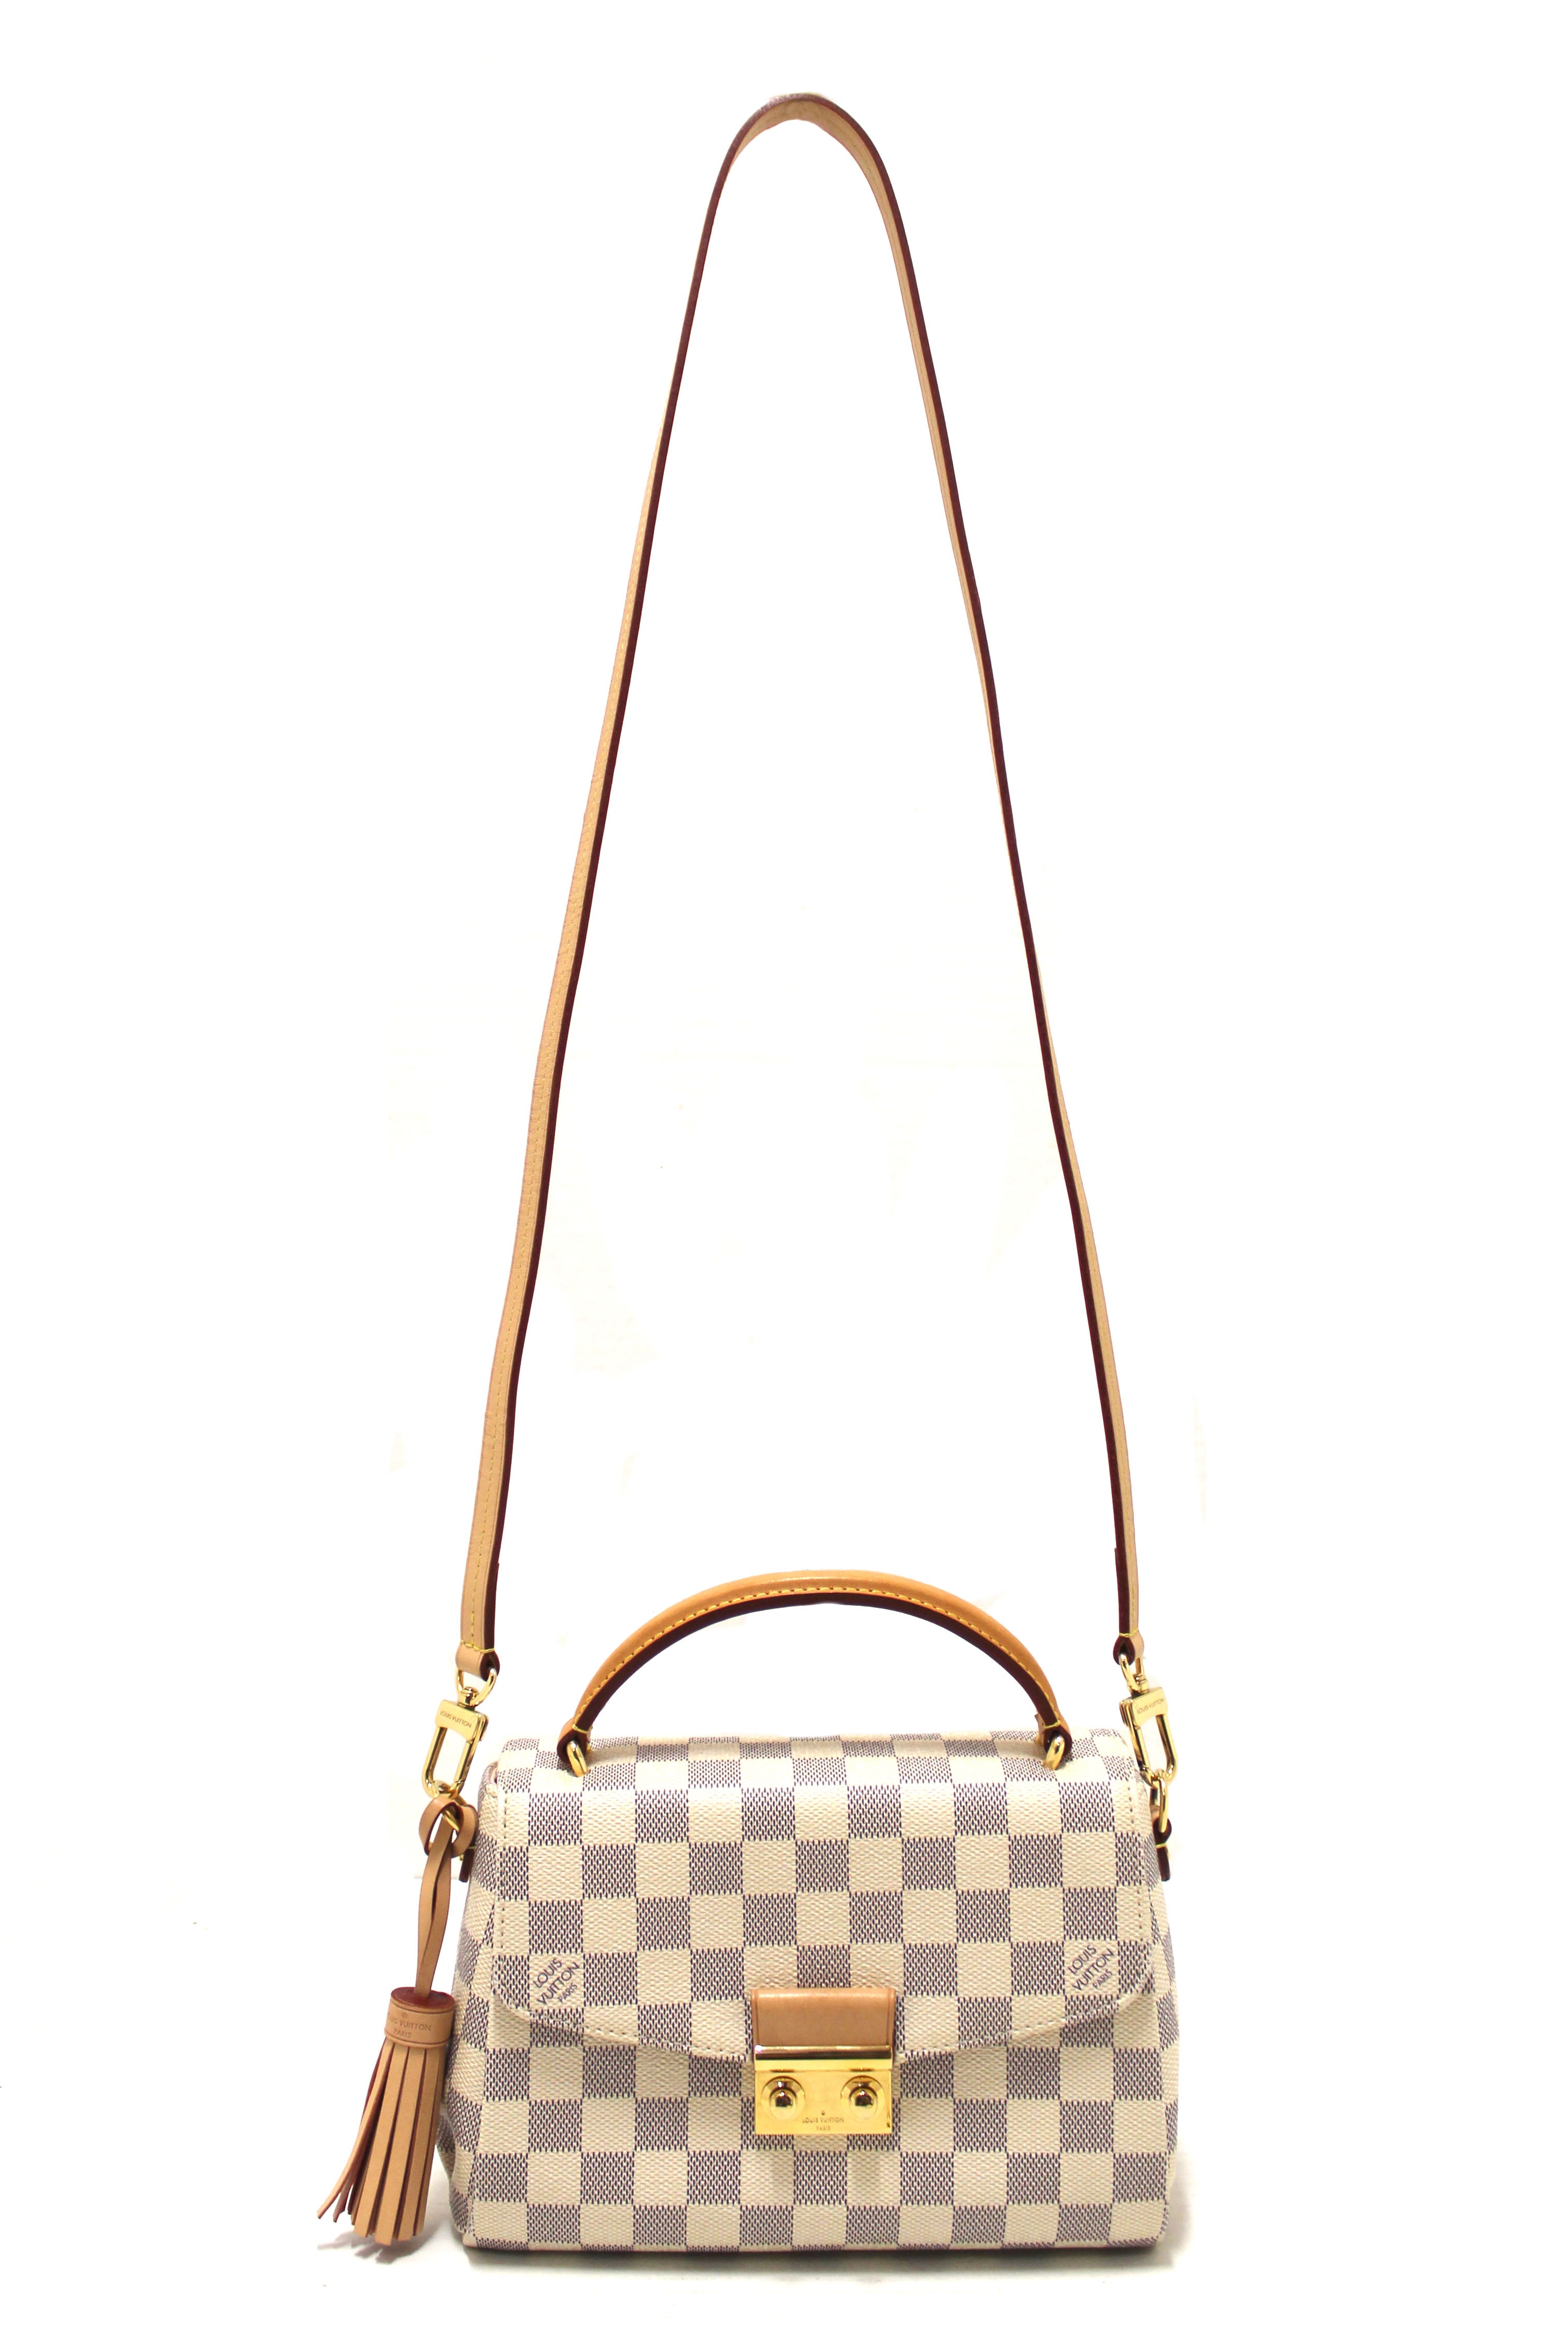 Handbags Louis Vuitton LV Croisette Bag in Damier Azur New